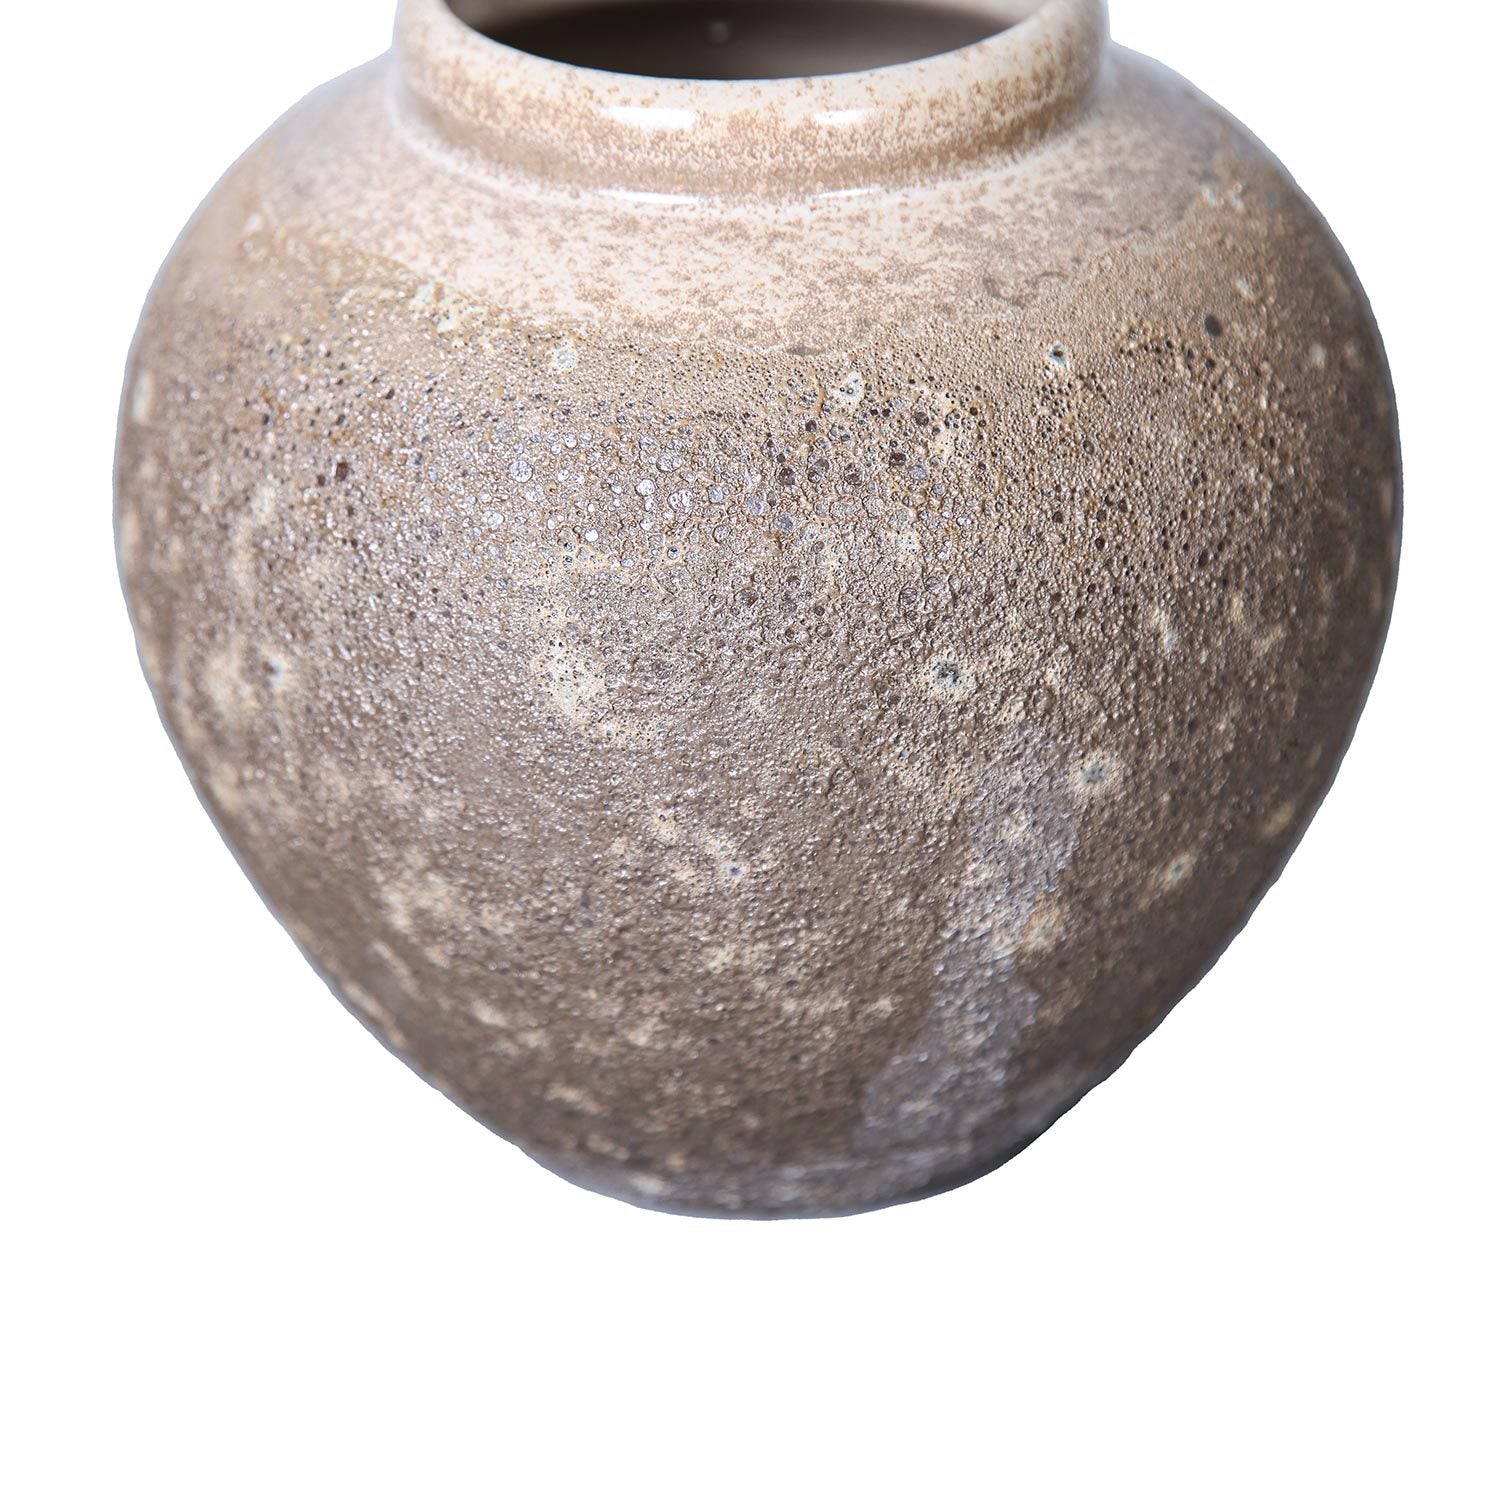 Vintage Sand Ceramic Vase 8.7"D x 8.7"H Artisanal retro gray-ceramic